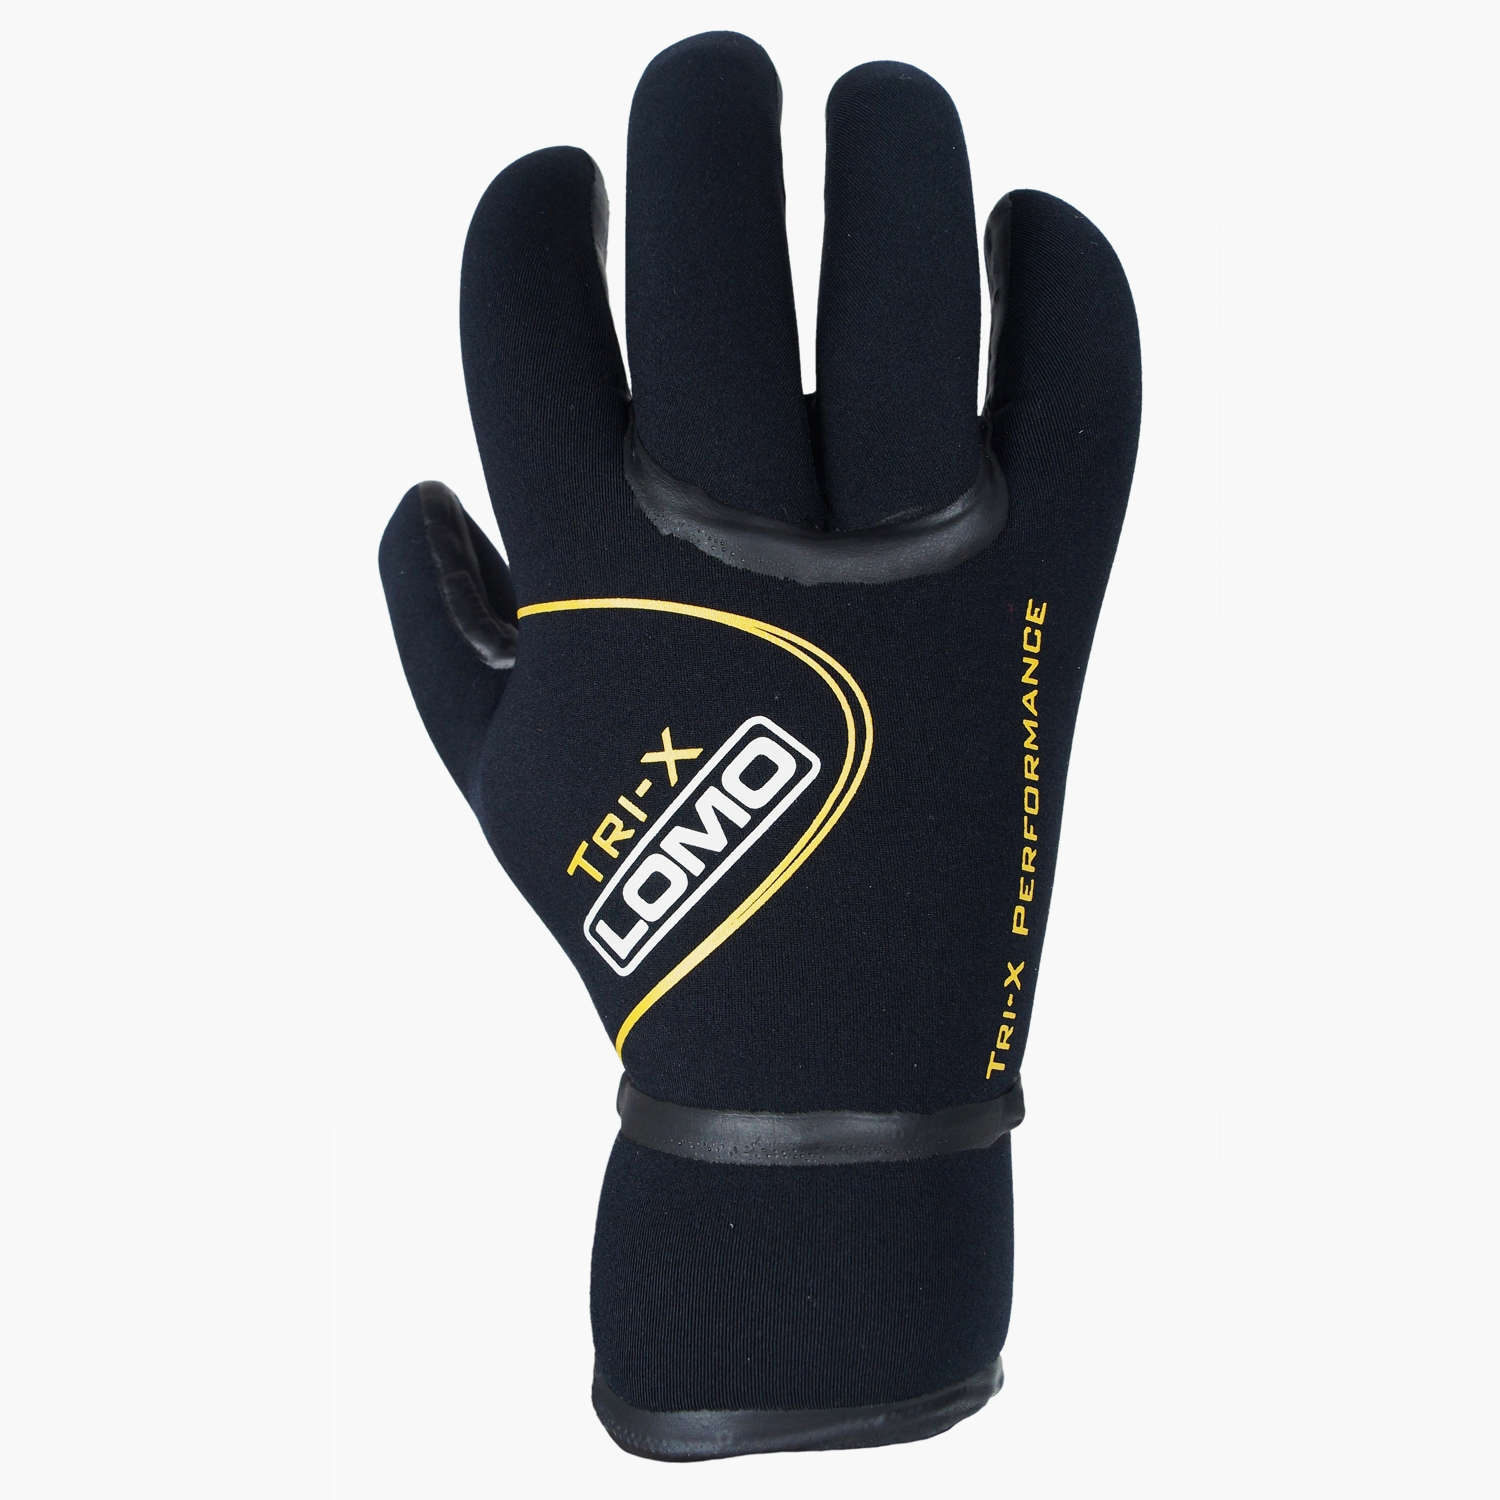 ZSZBACE Diving Gloves Paddling Training Gloves,Neoprene Swimming Gloves Winter Swimming Training Equipment for Swimming Training. 